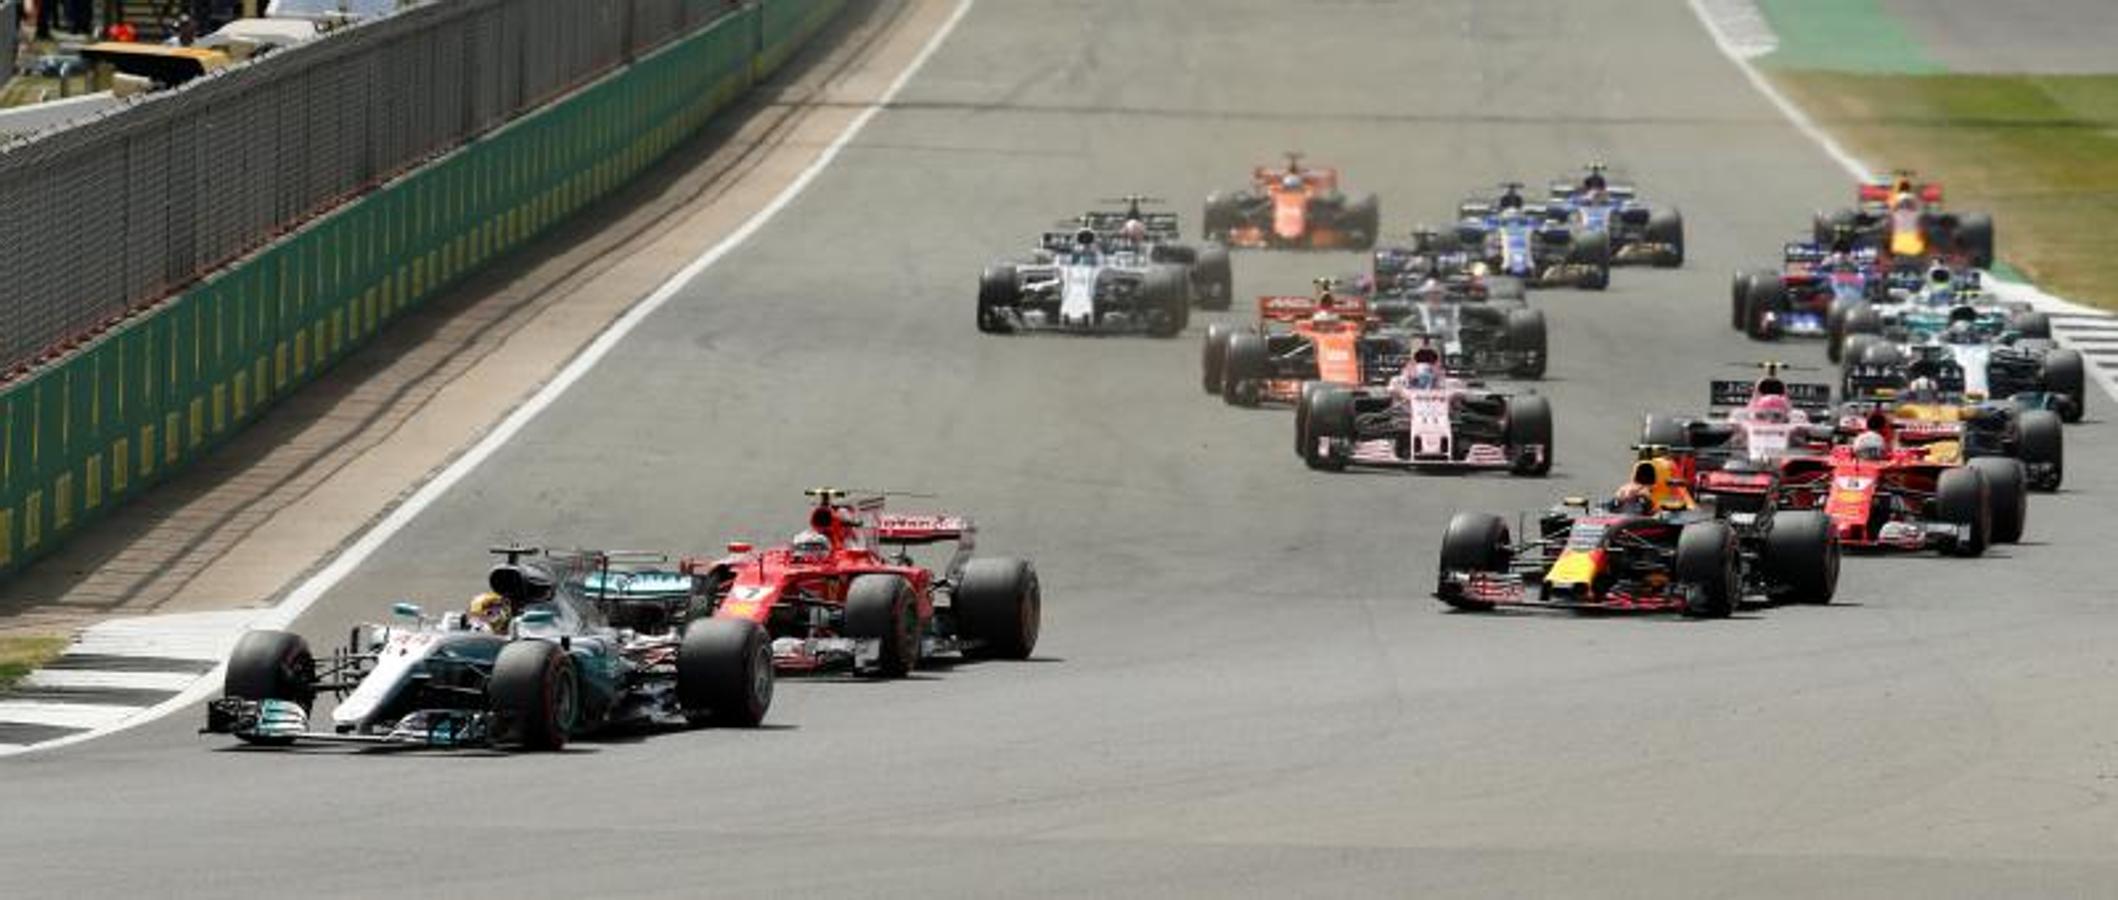 En Gran Bretaña Lewis Hamilton parte como favorito